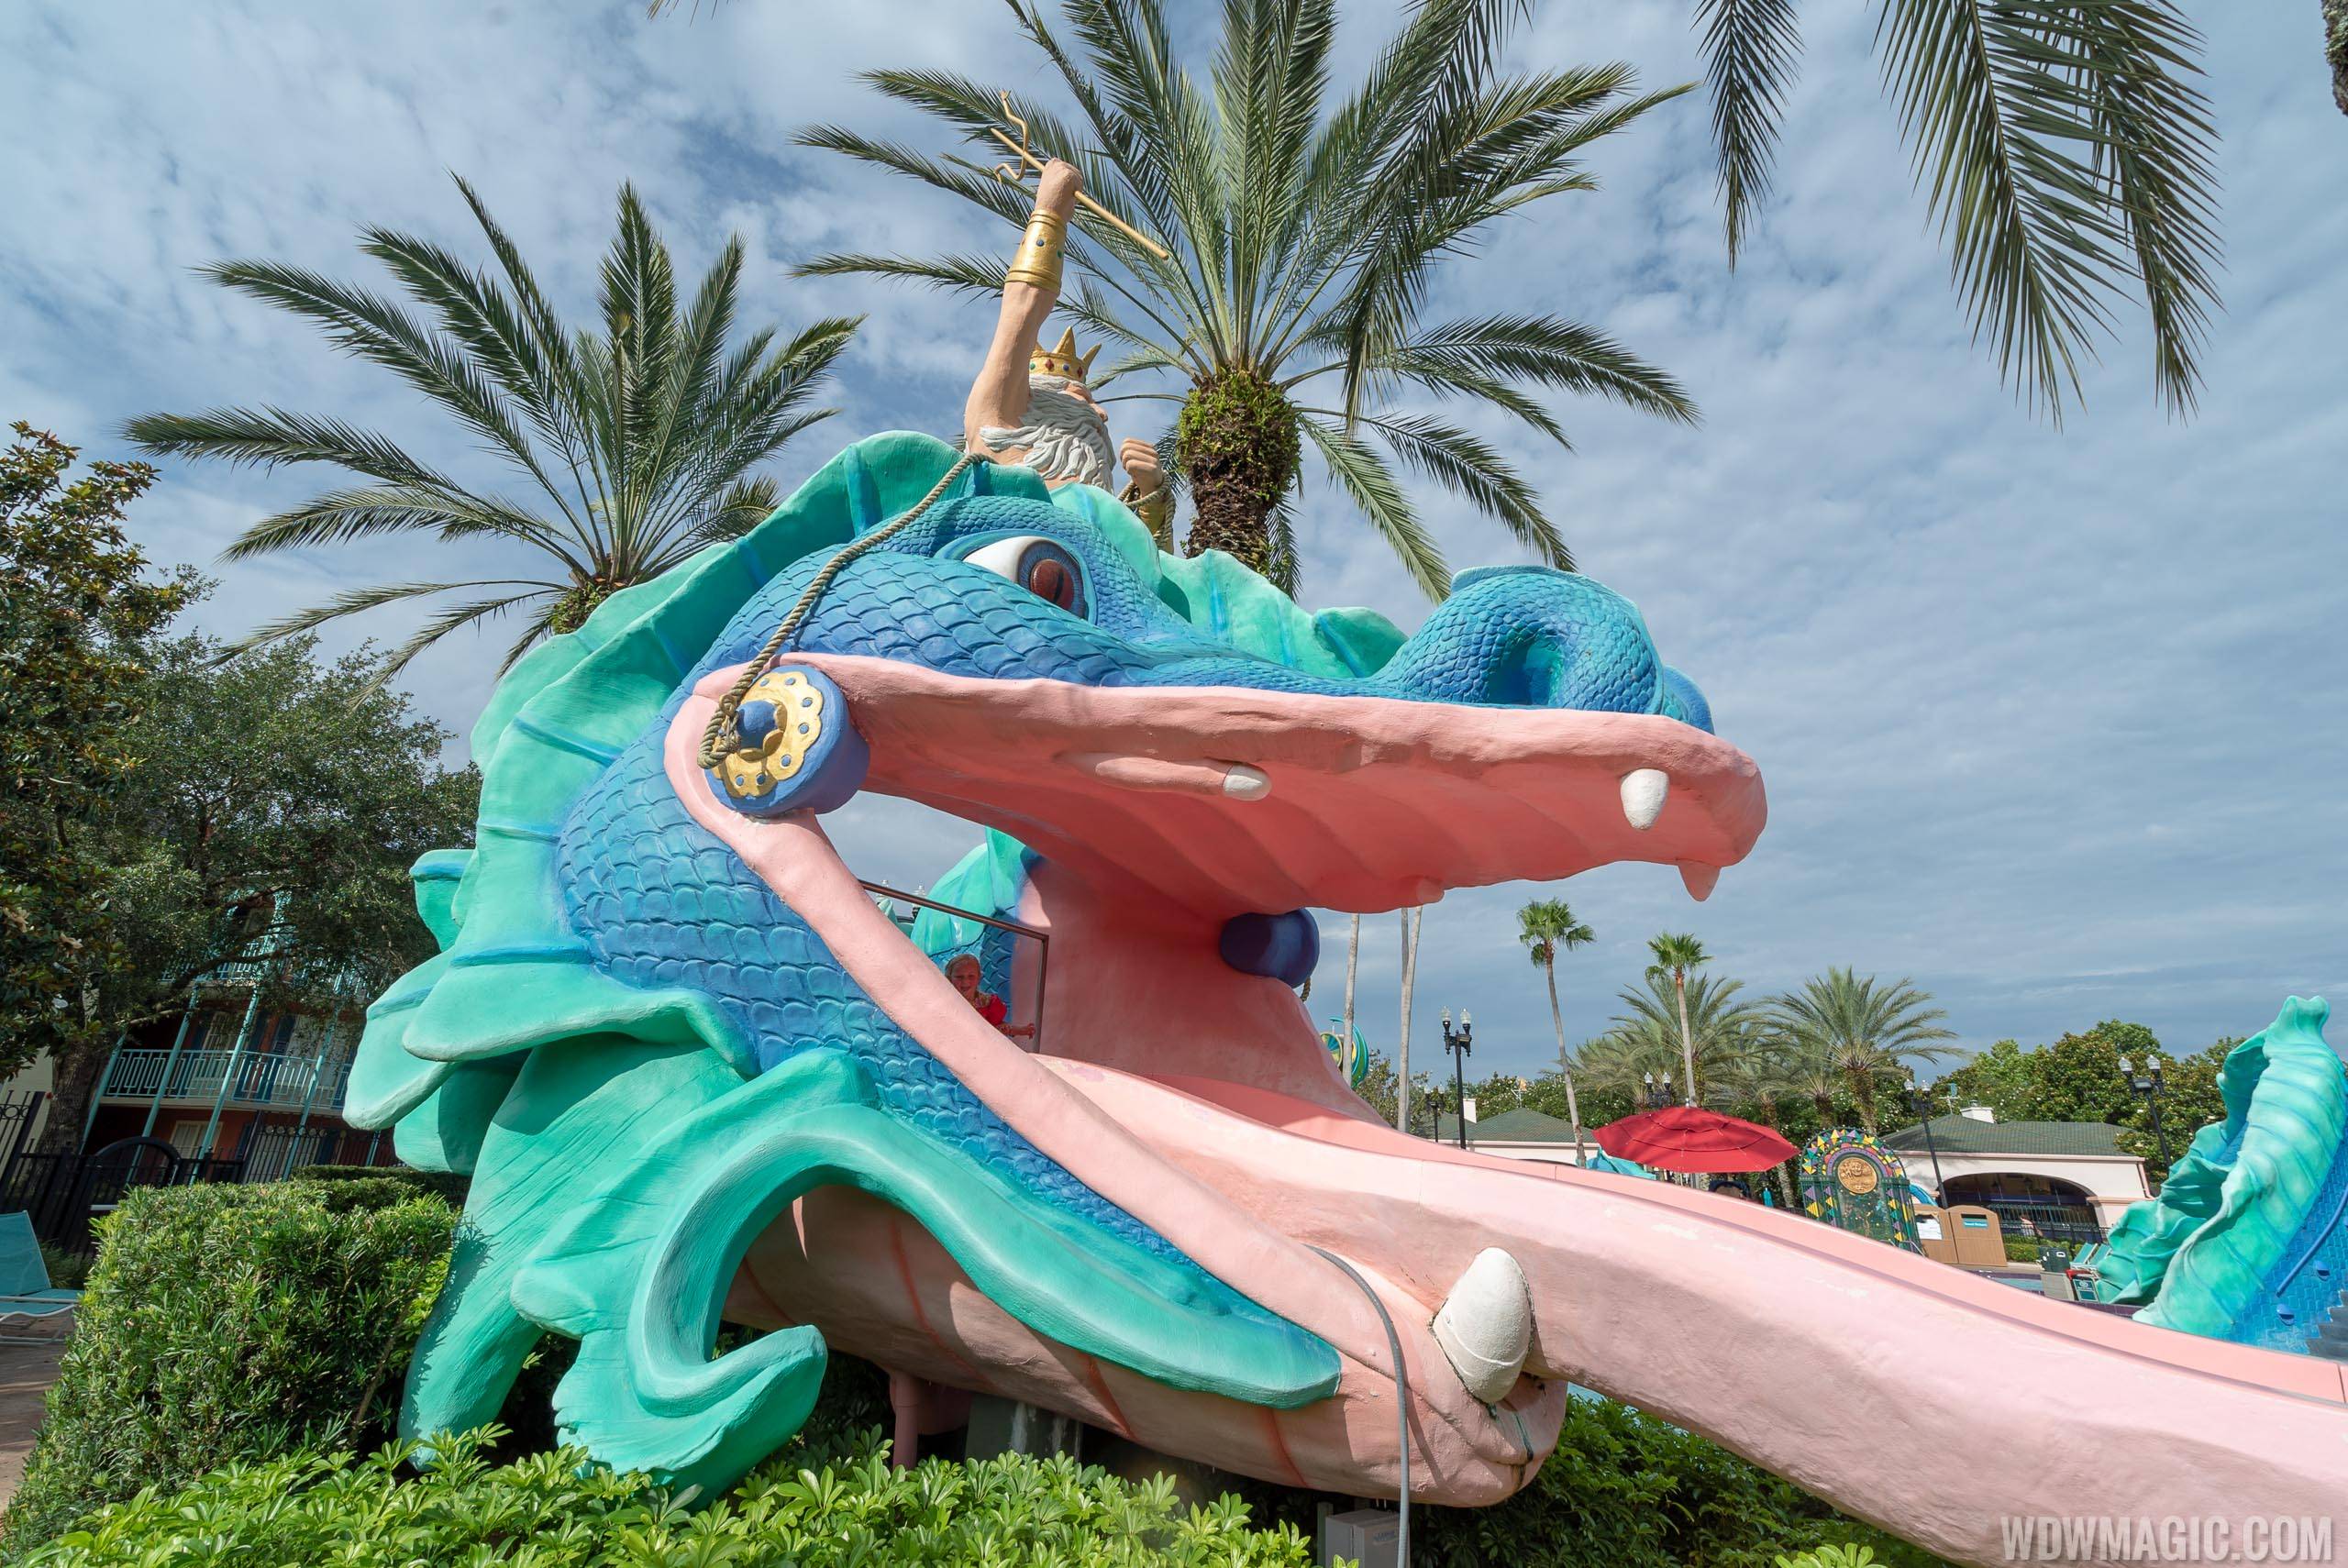 Disney's Port Orleans Resort - French Quarter reopens late October